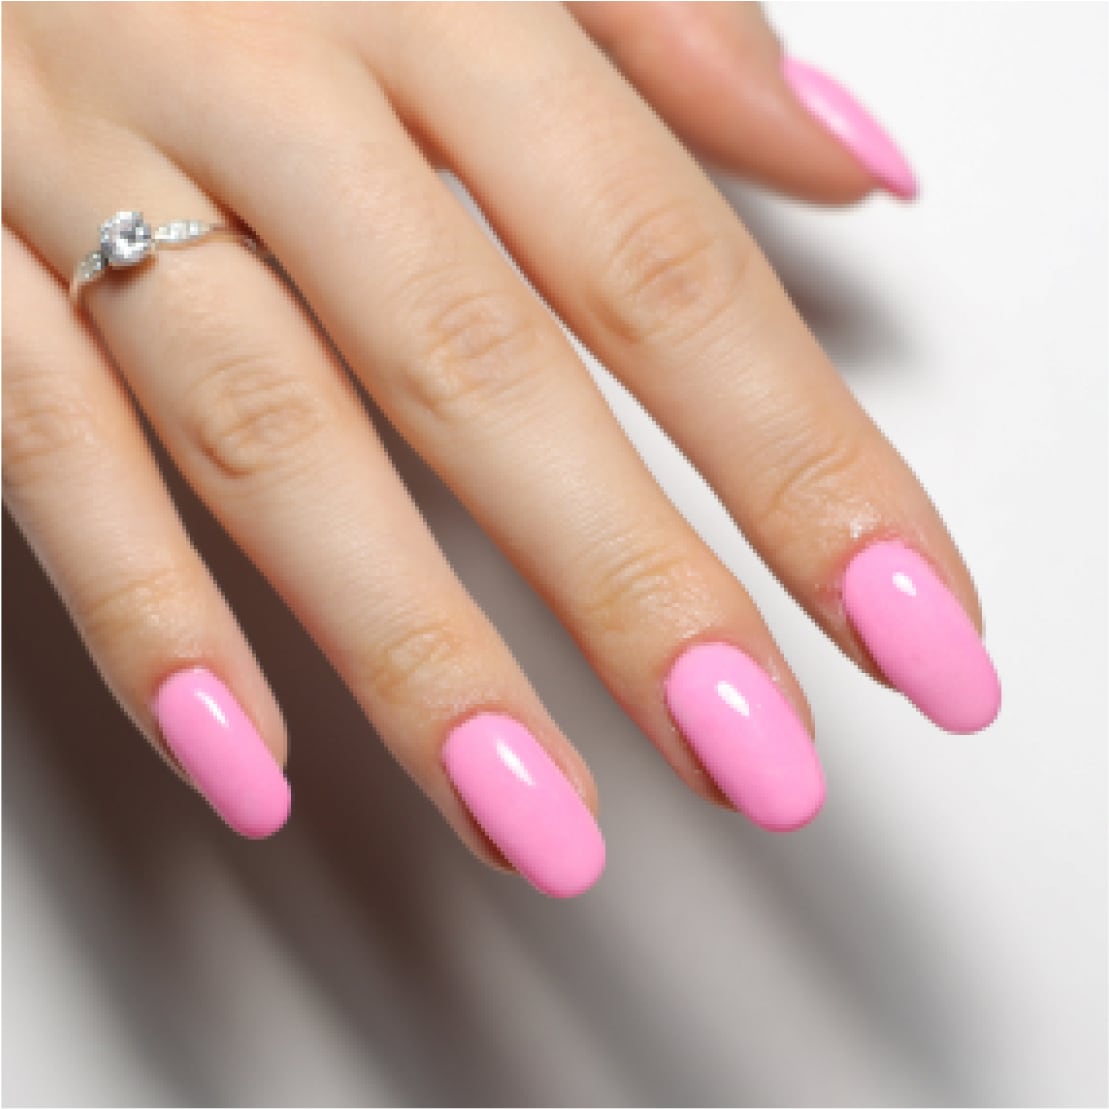 Minimalistic - Light Pink Sheer Nail Polish - Essie